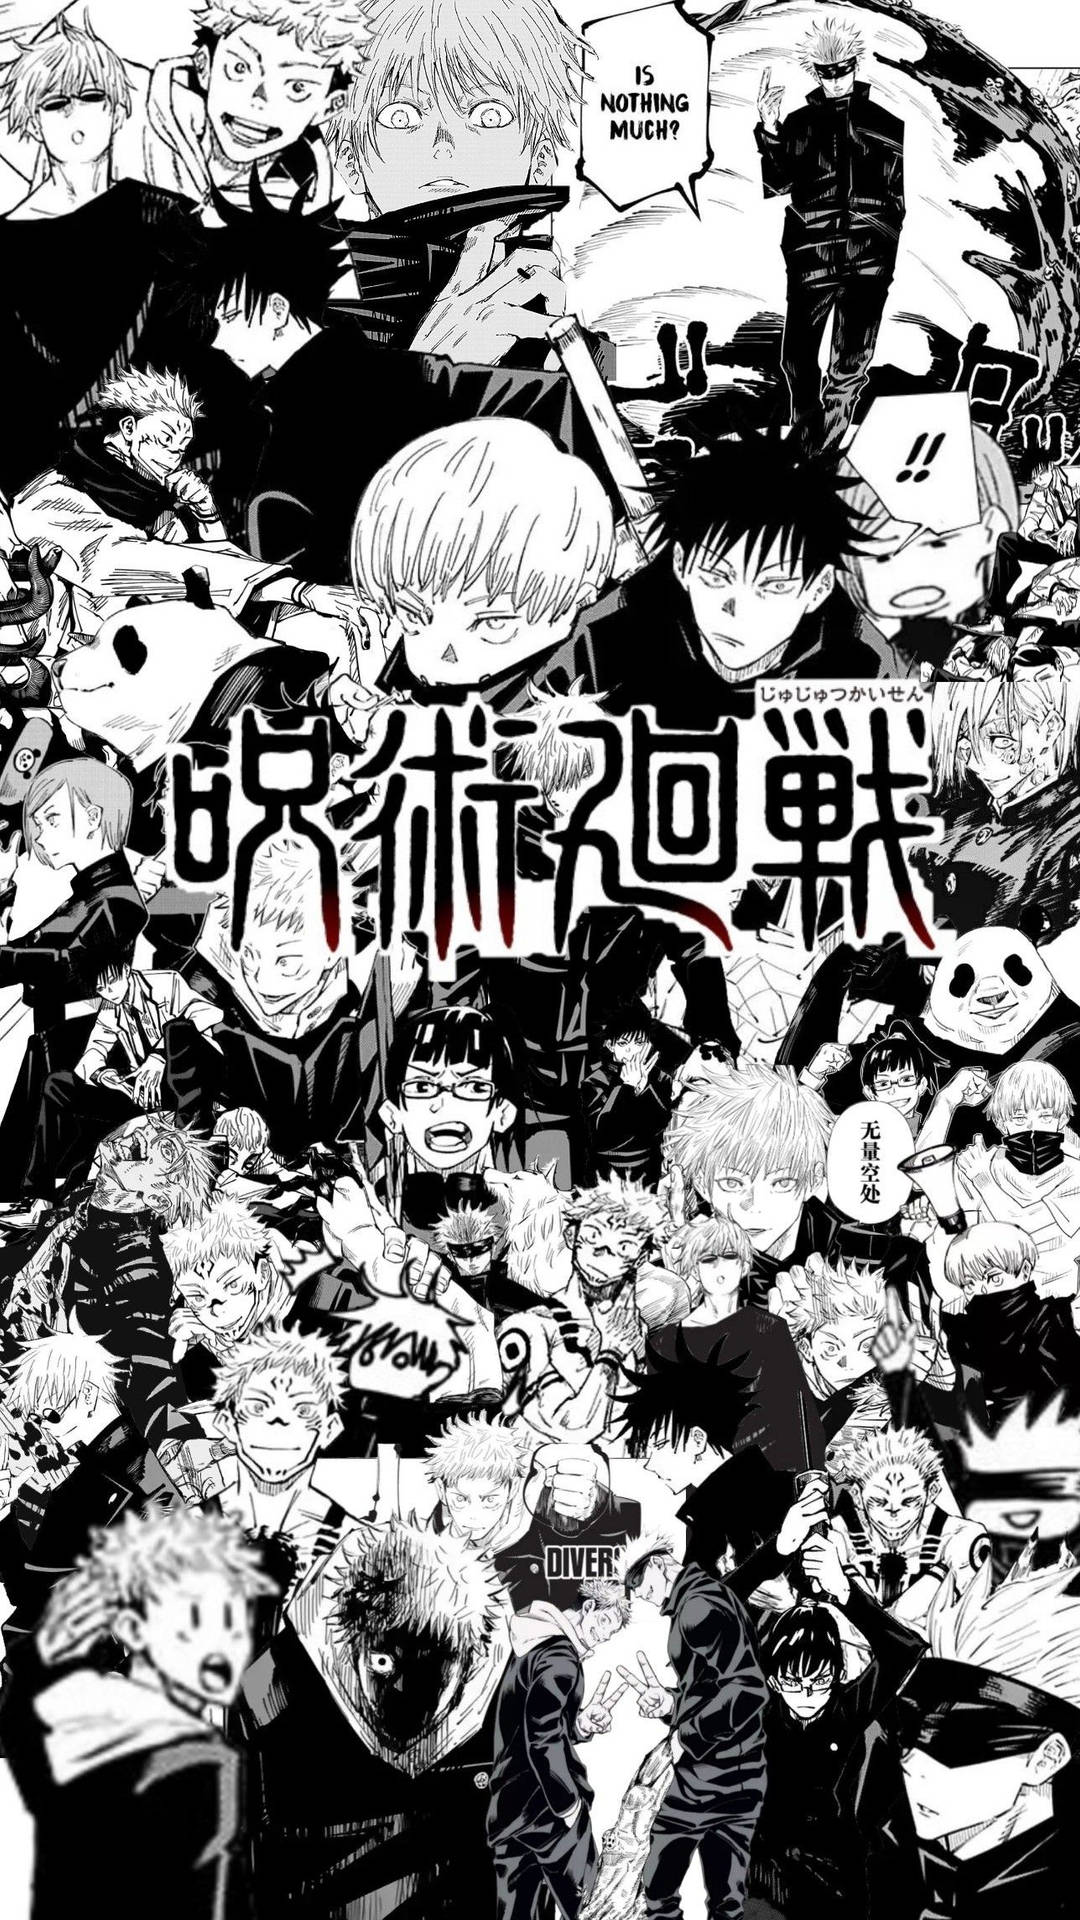 Manga 1288X2289 Wallpaper and Background Image